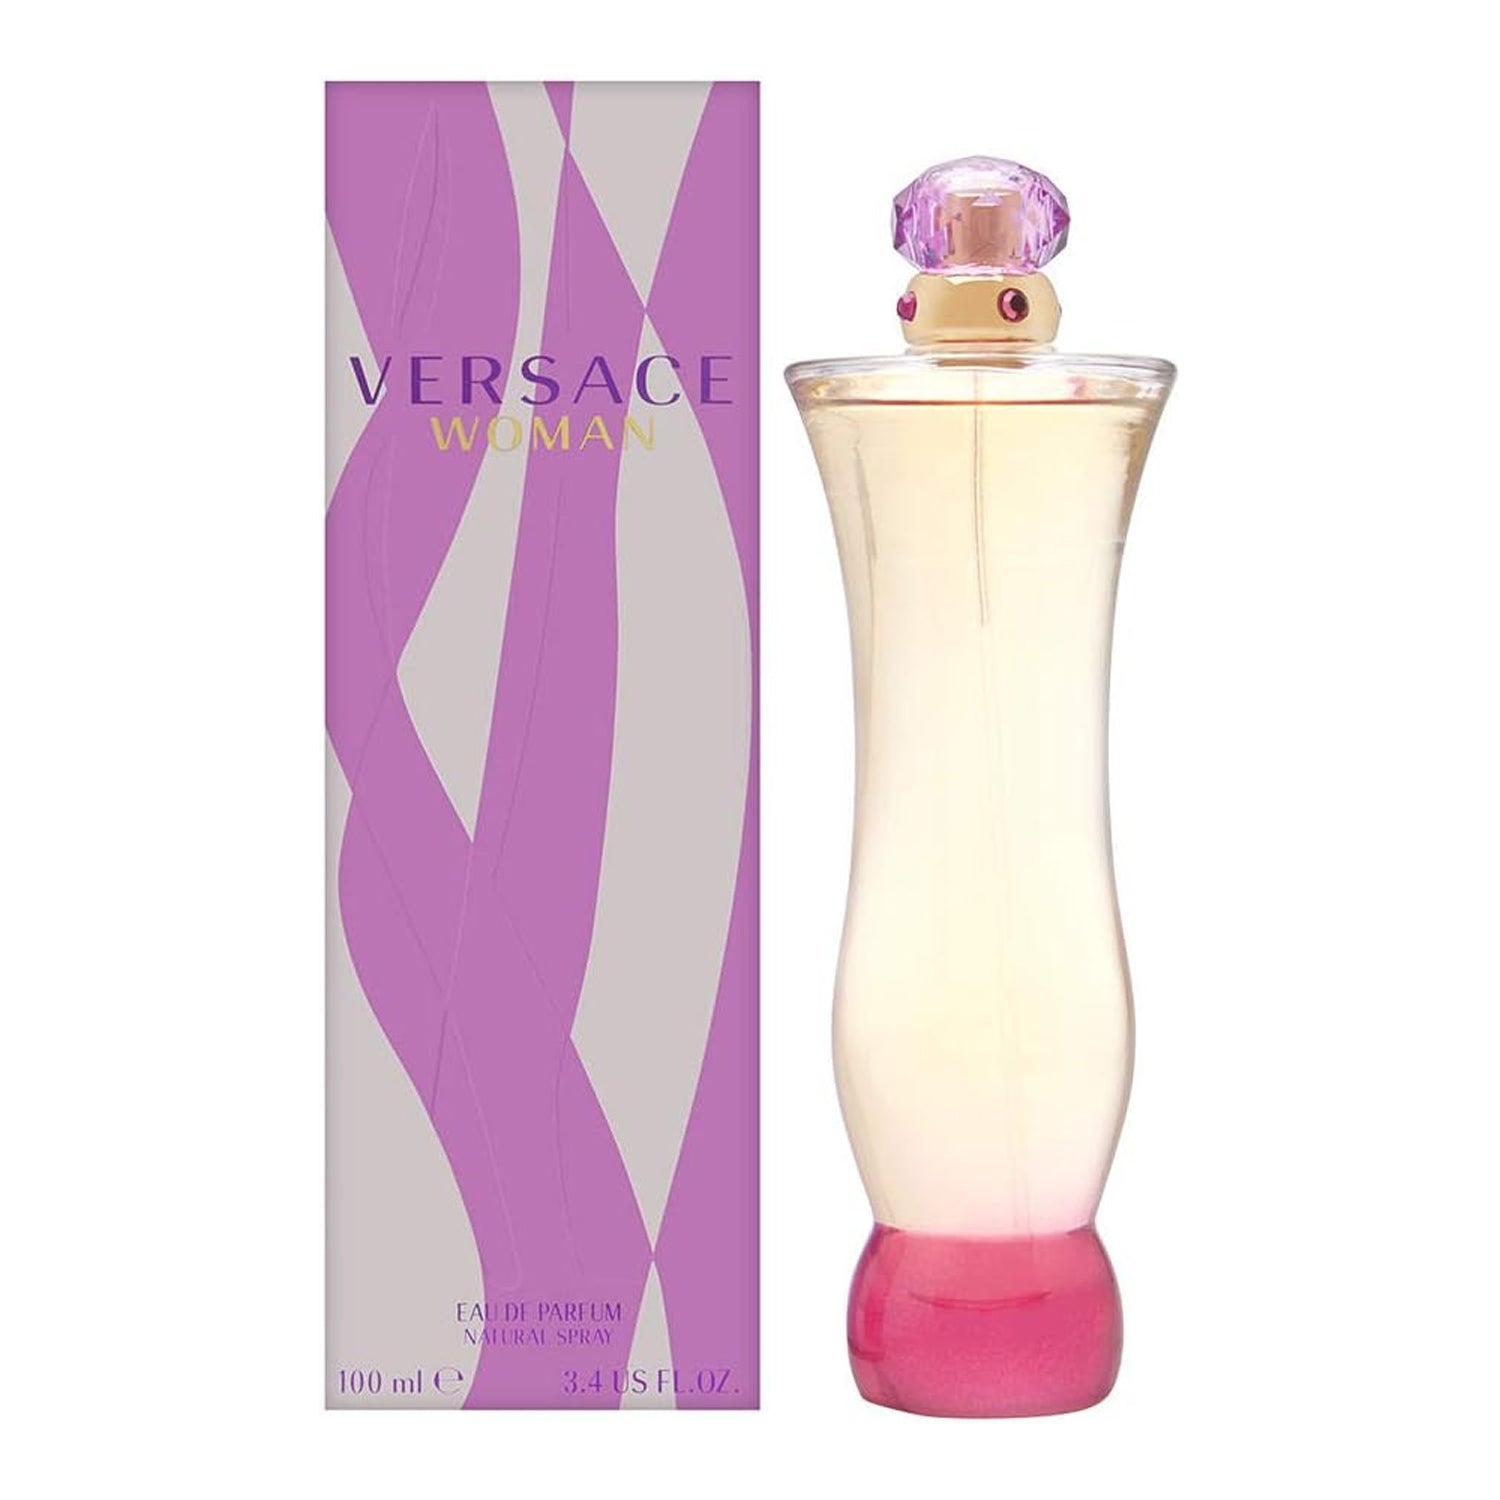 Versace Woman Eau De Perfume Spray for Women